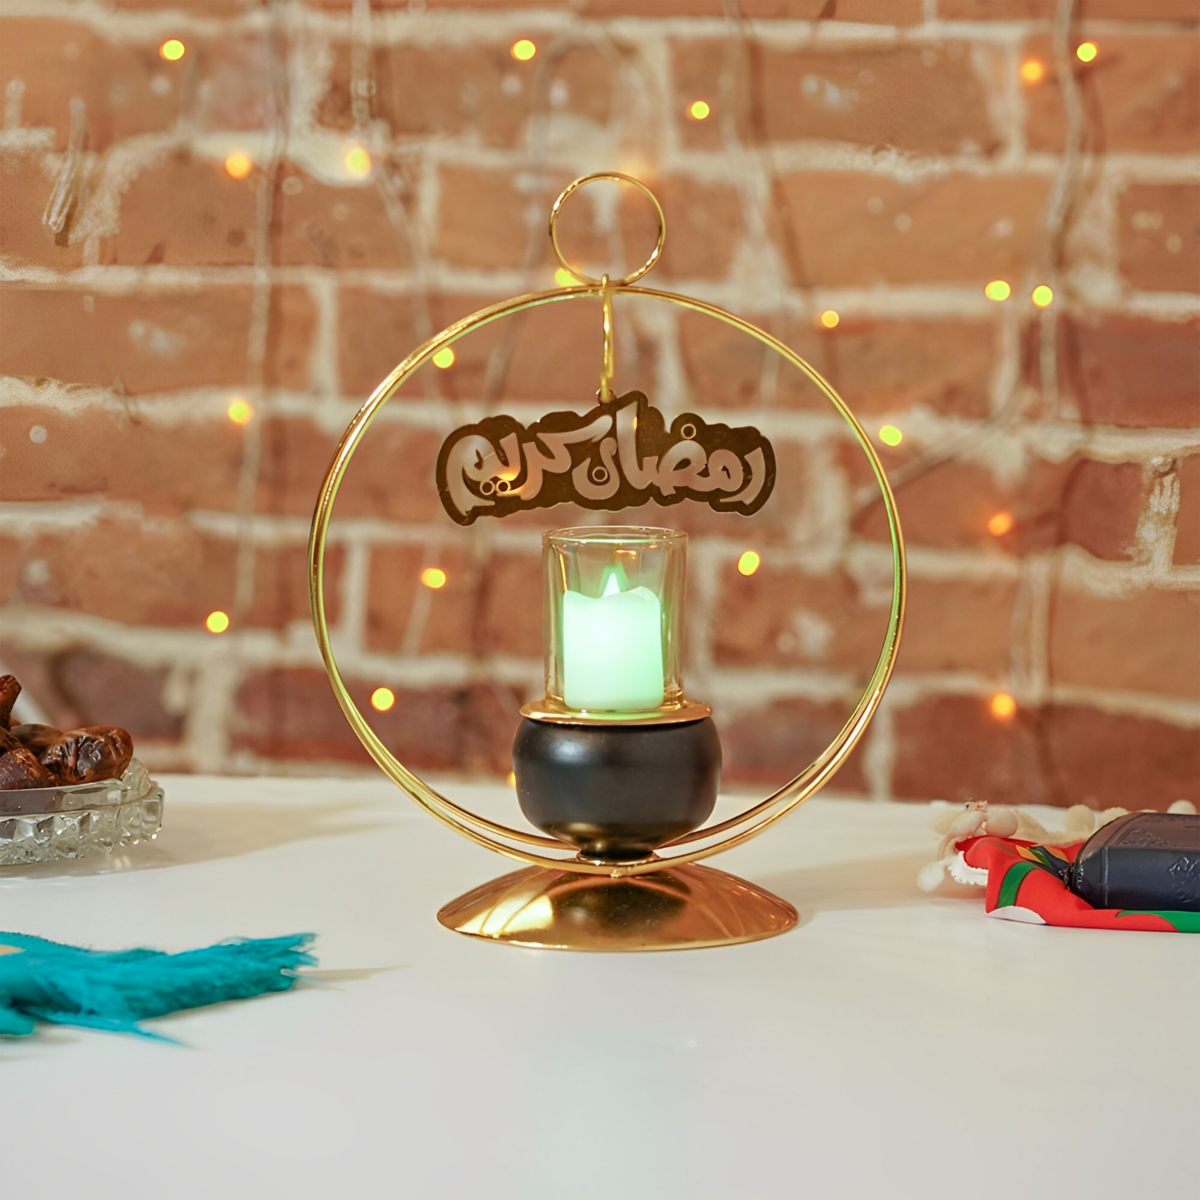 فانوس شمعة رمضان كريم